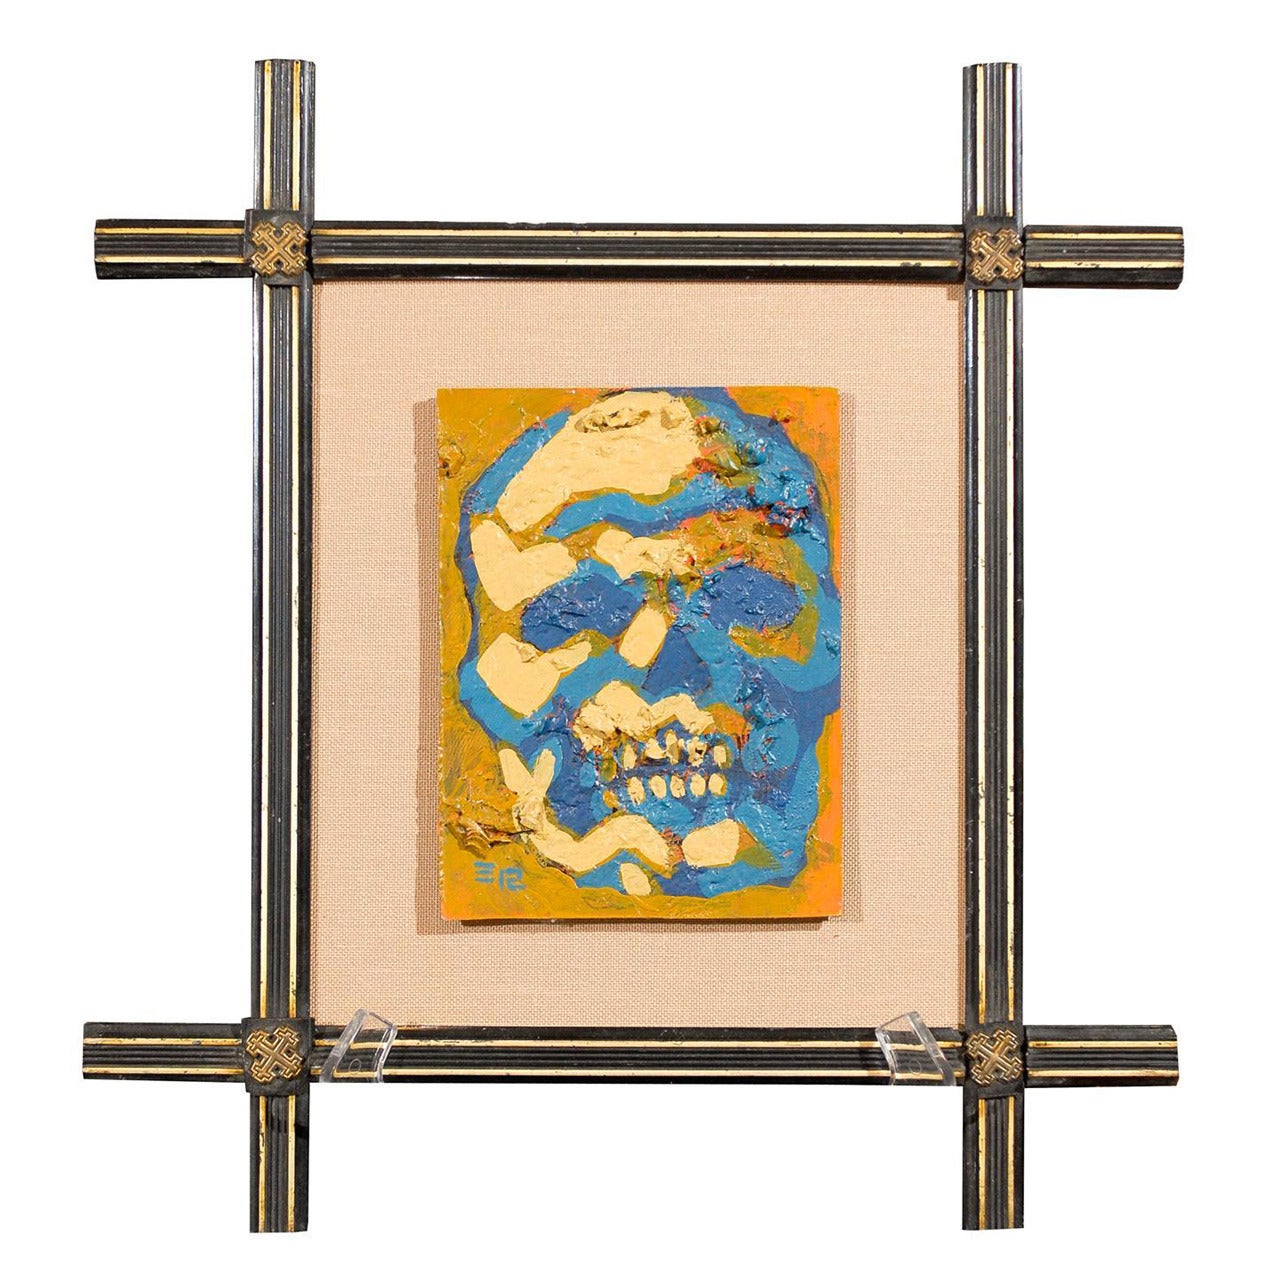 Skull and Crossbones Framed Painting For Sale